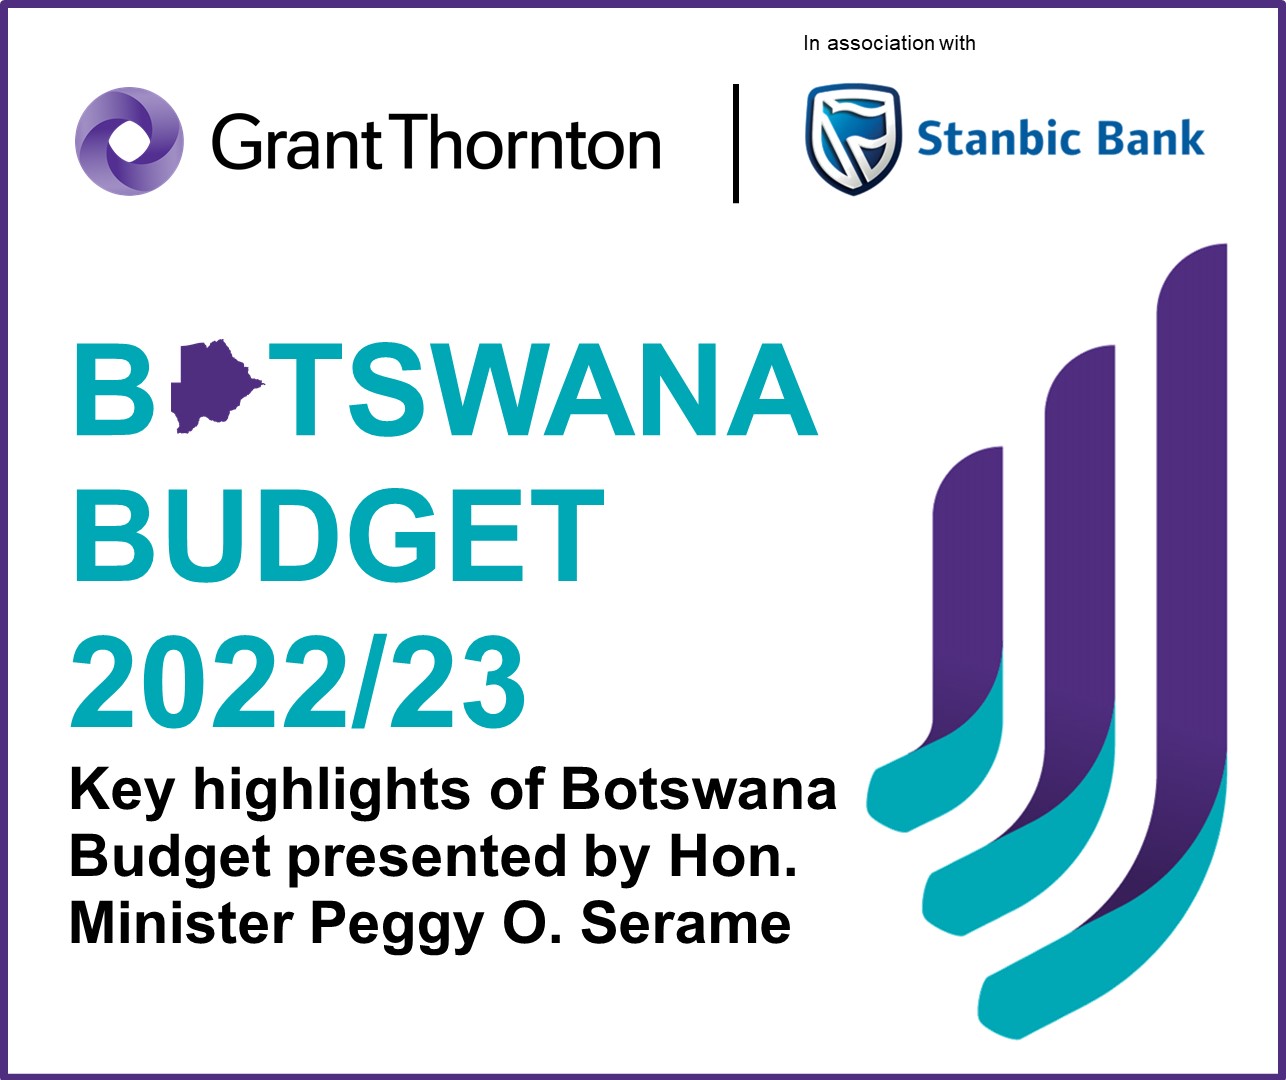 Key highlights of Botswana Budget 2022/23